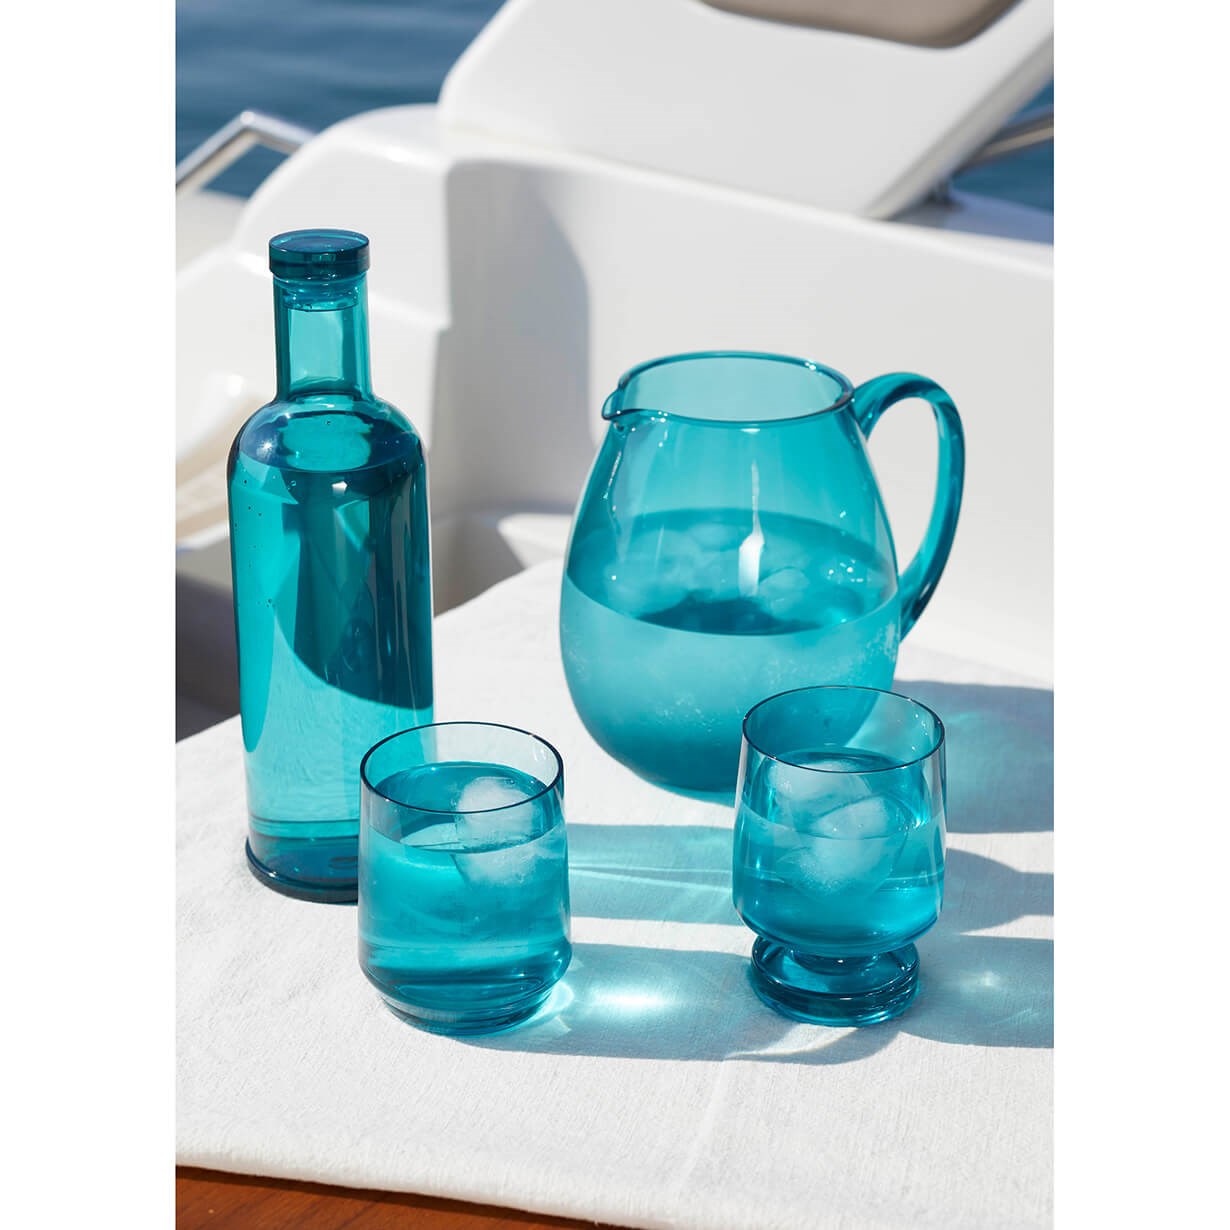 Şarap Kadeh Seti Bahamas Turquoise 6'lı 7124214-21414 